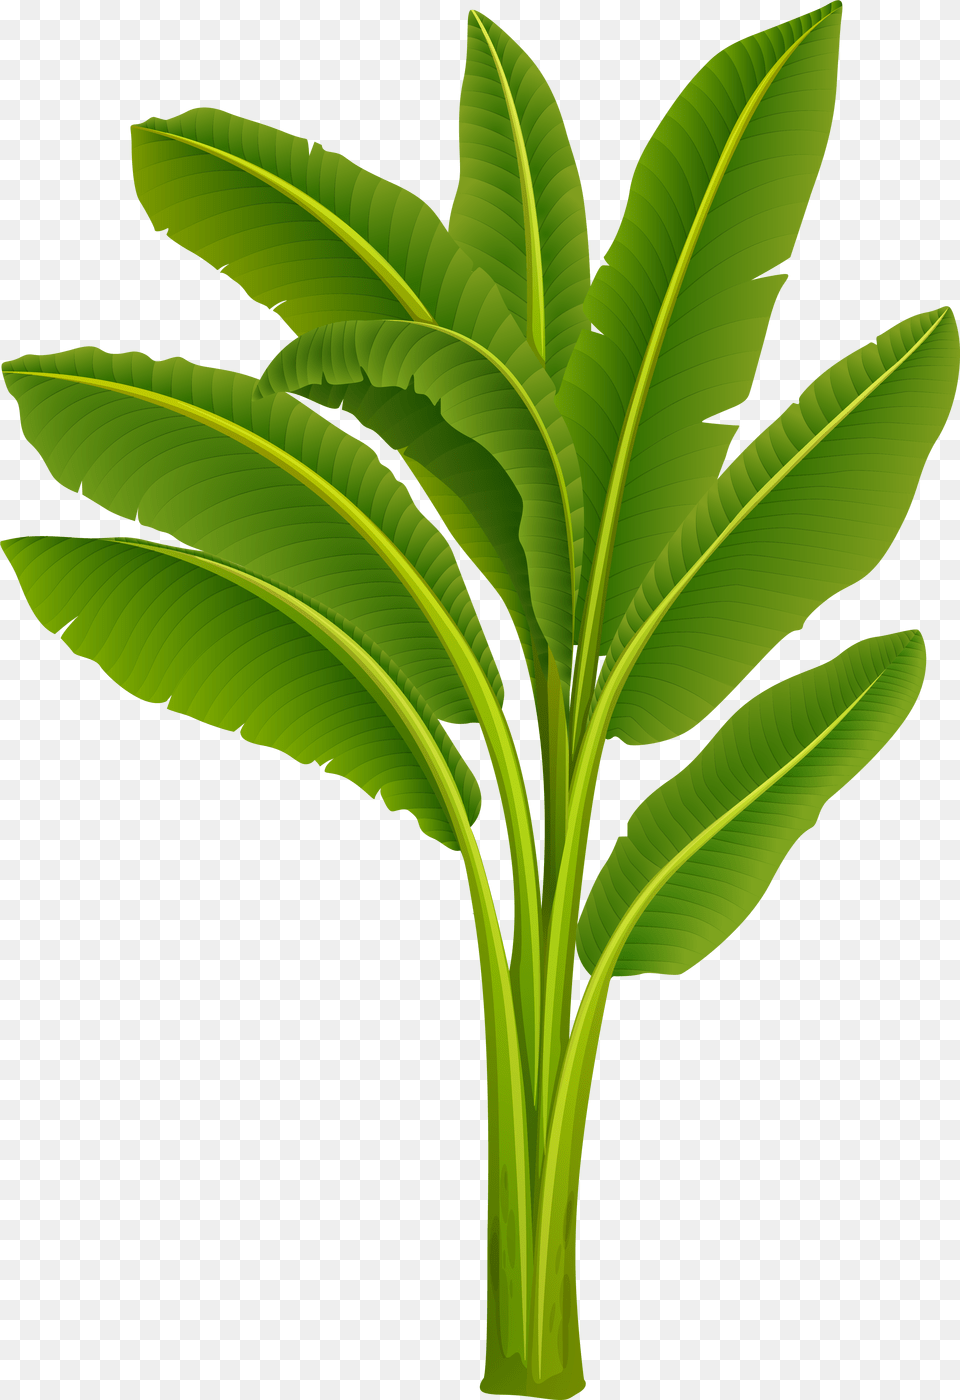 Library Of Banana Tree Leaves Jpg Freeuse Stock Files Banana Tree, Green, Leaf, Plant, Food Png Image